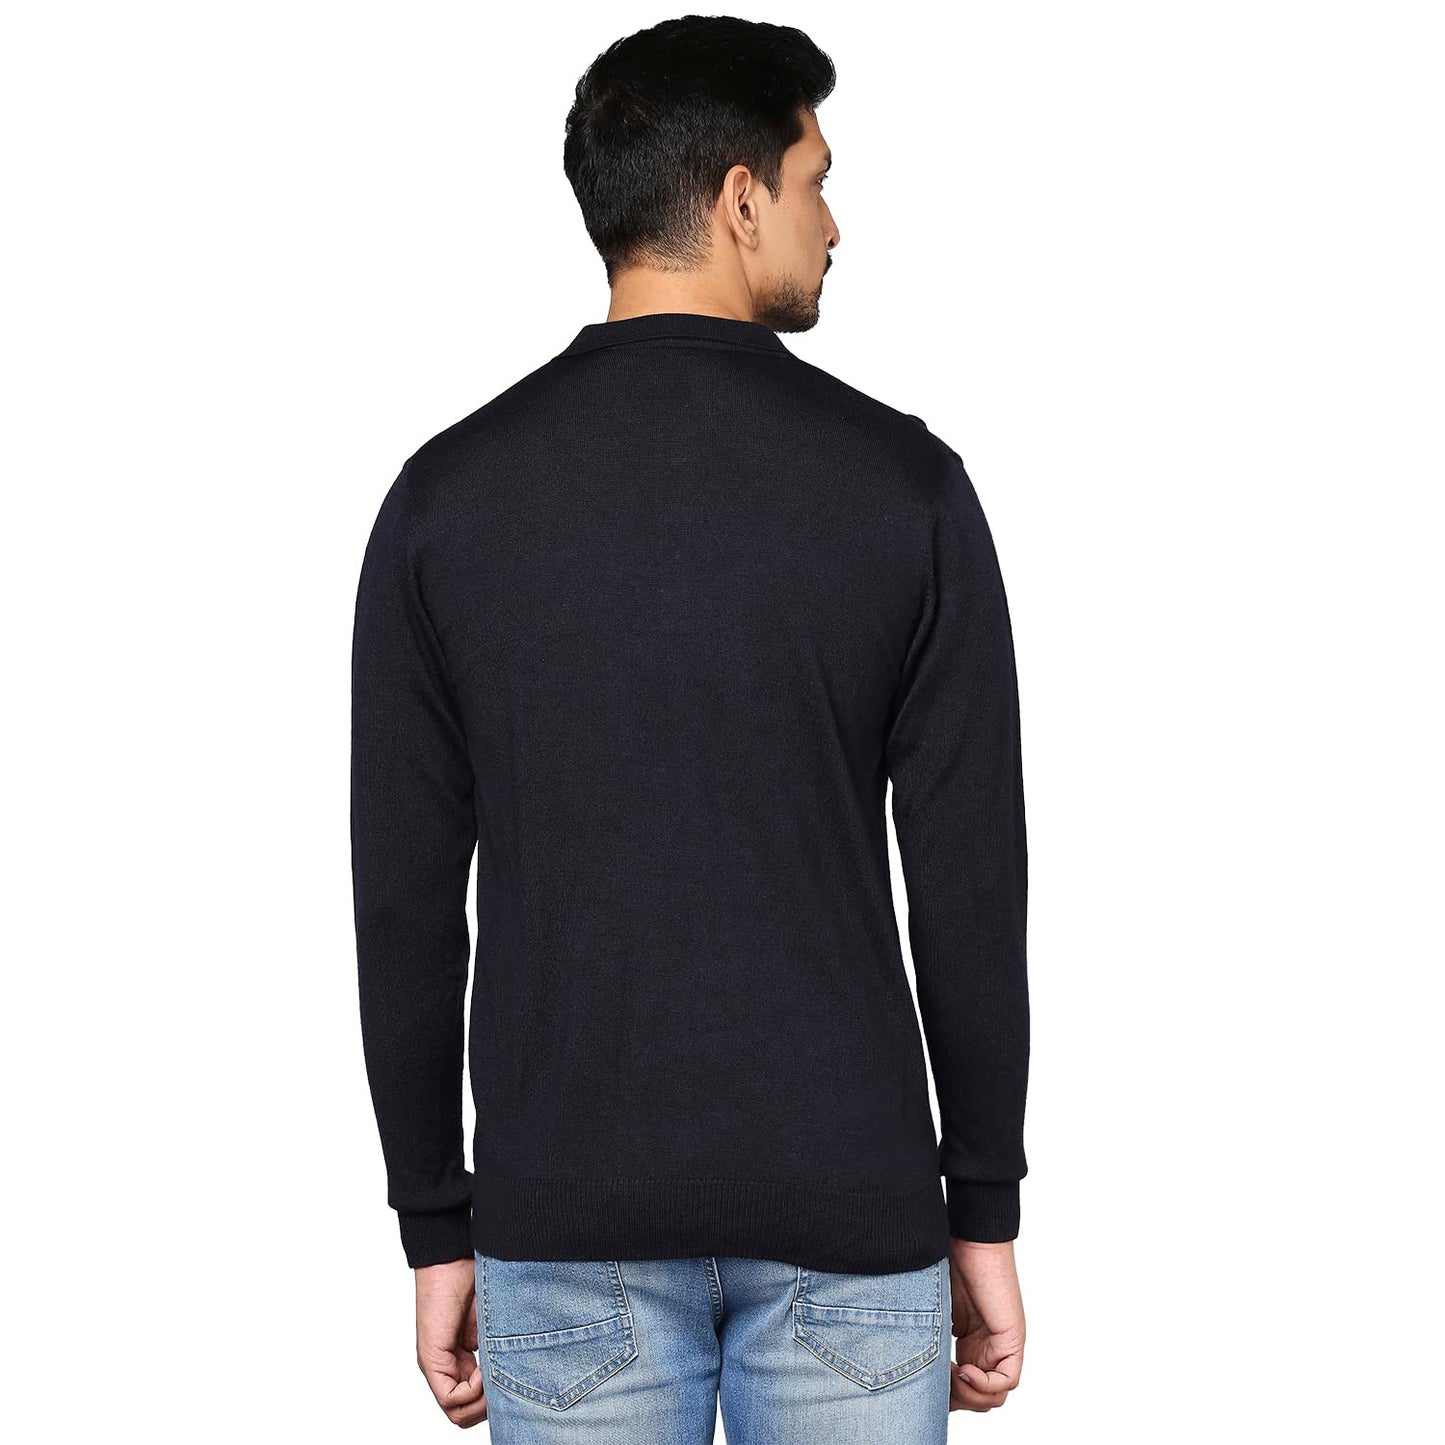 Raymond Medium Grey Sweater